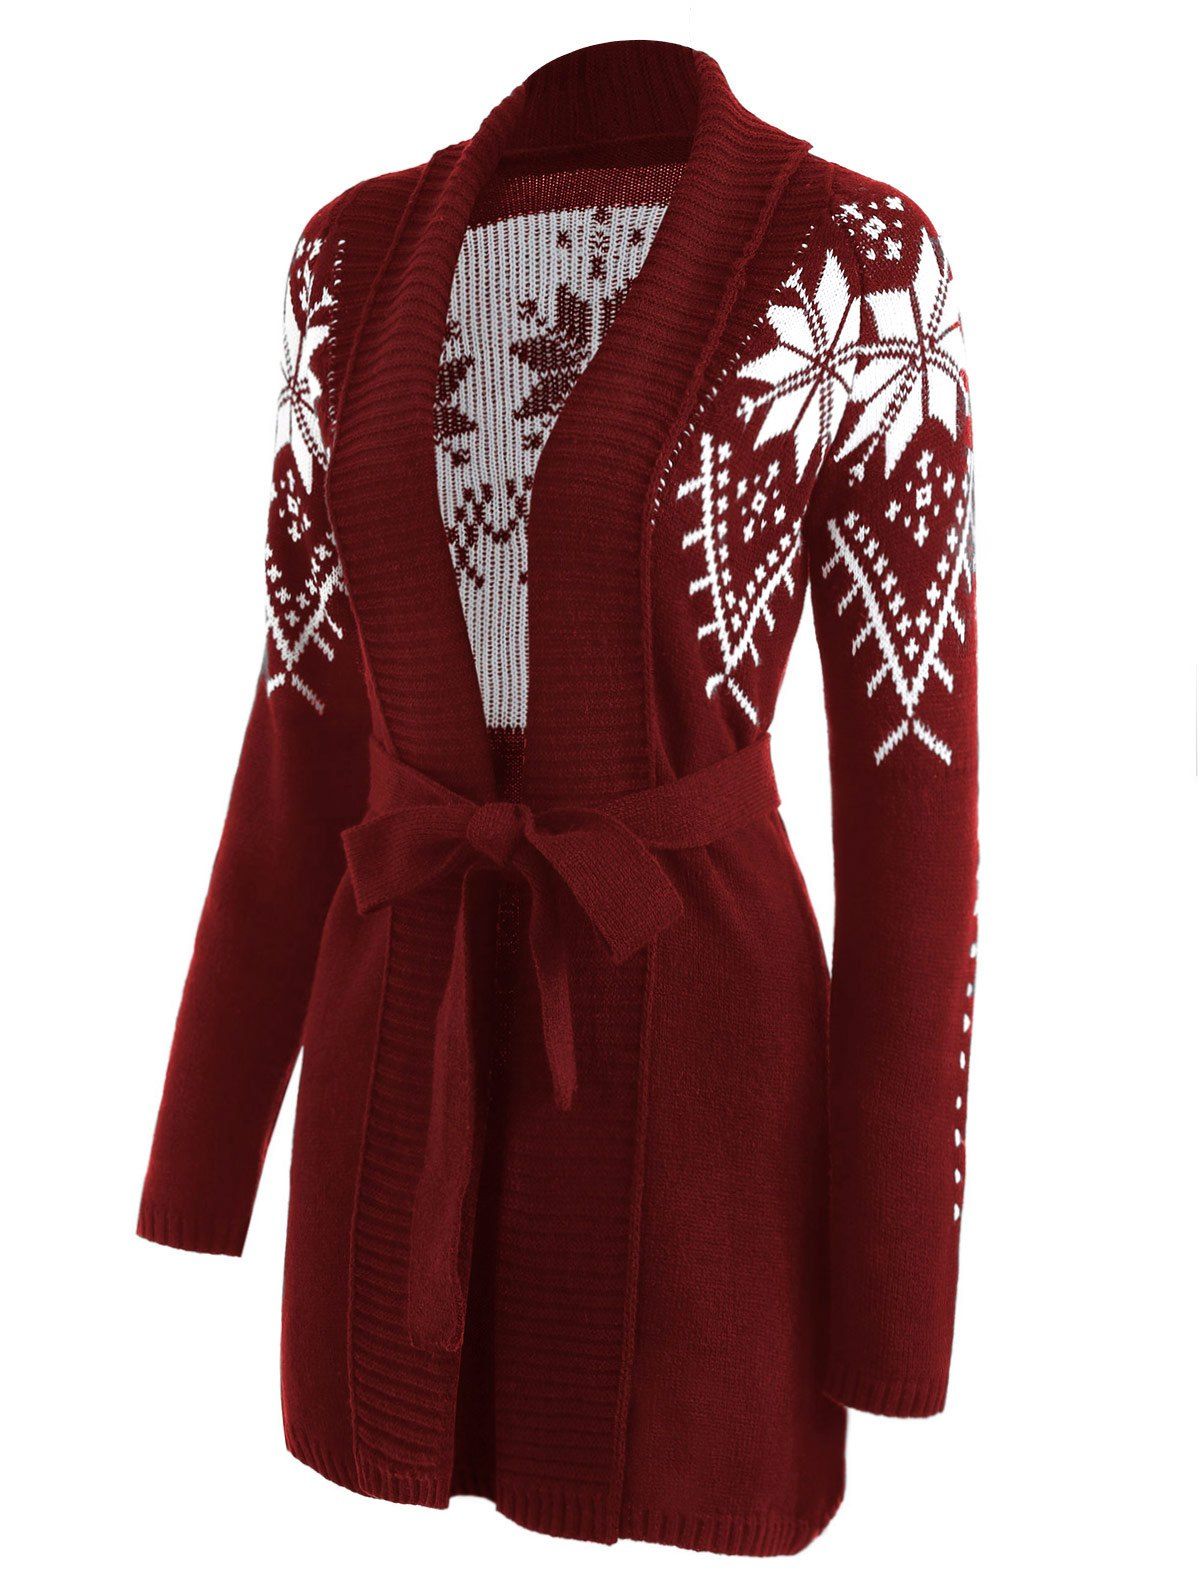 Shawl Collar Snowflake Jacquard Wrap Cardigan - WINE RED S